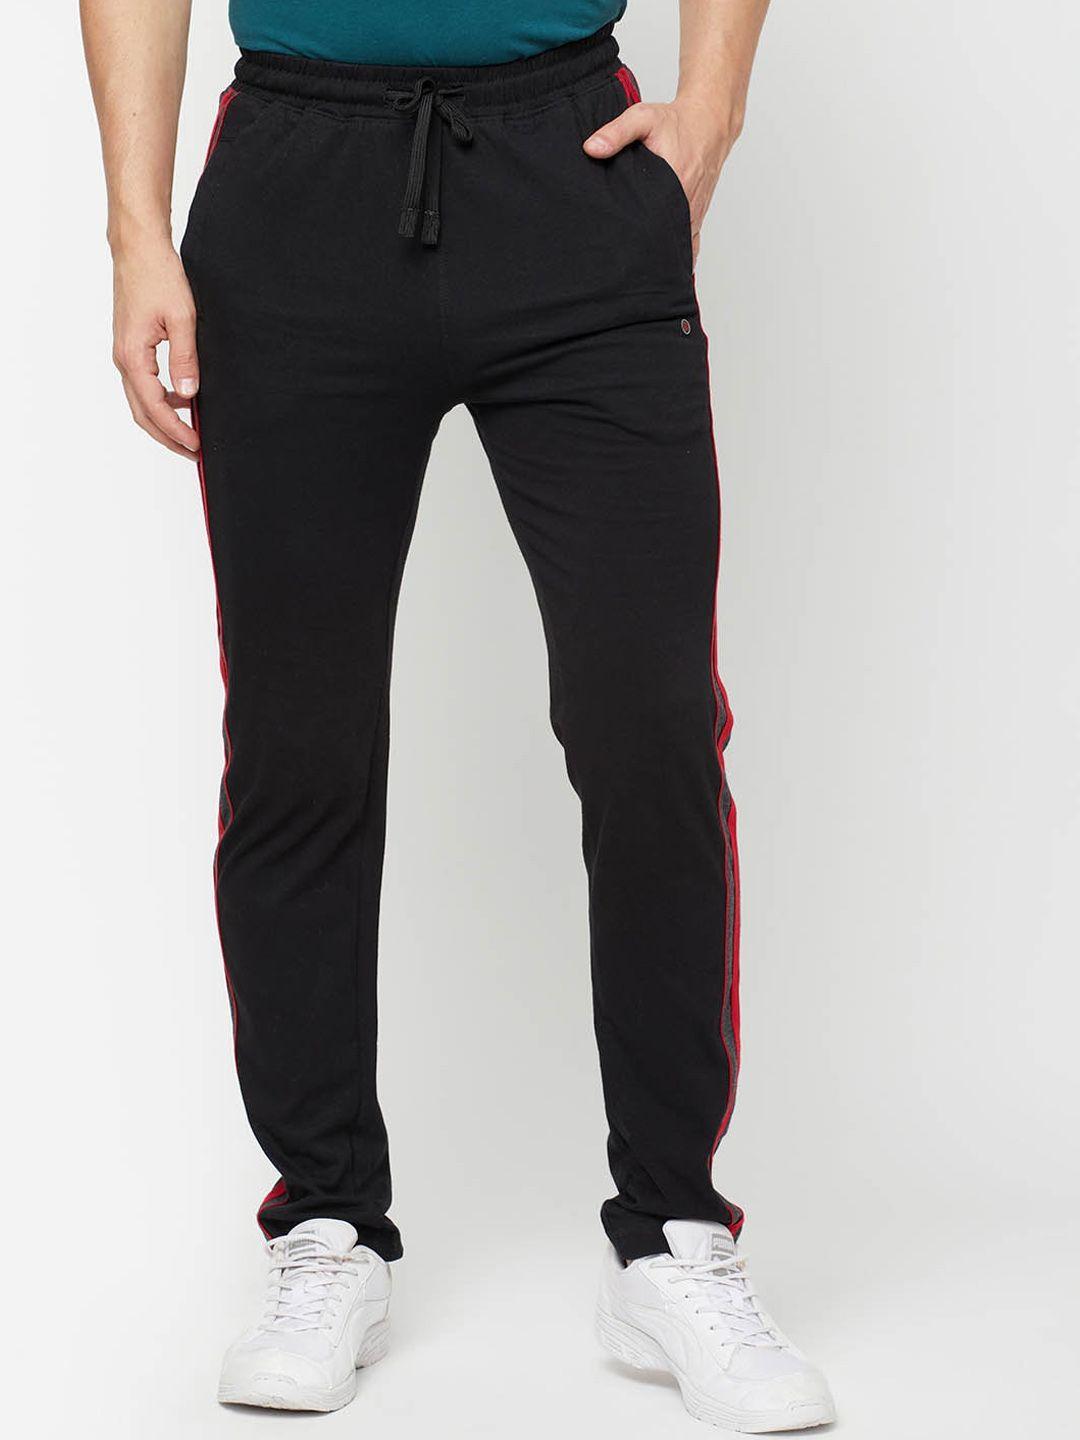 sporto men black solid cotton slim-fit track pants